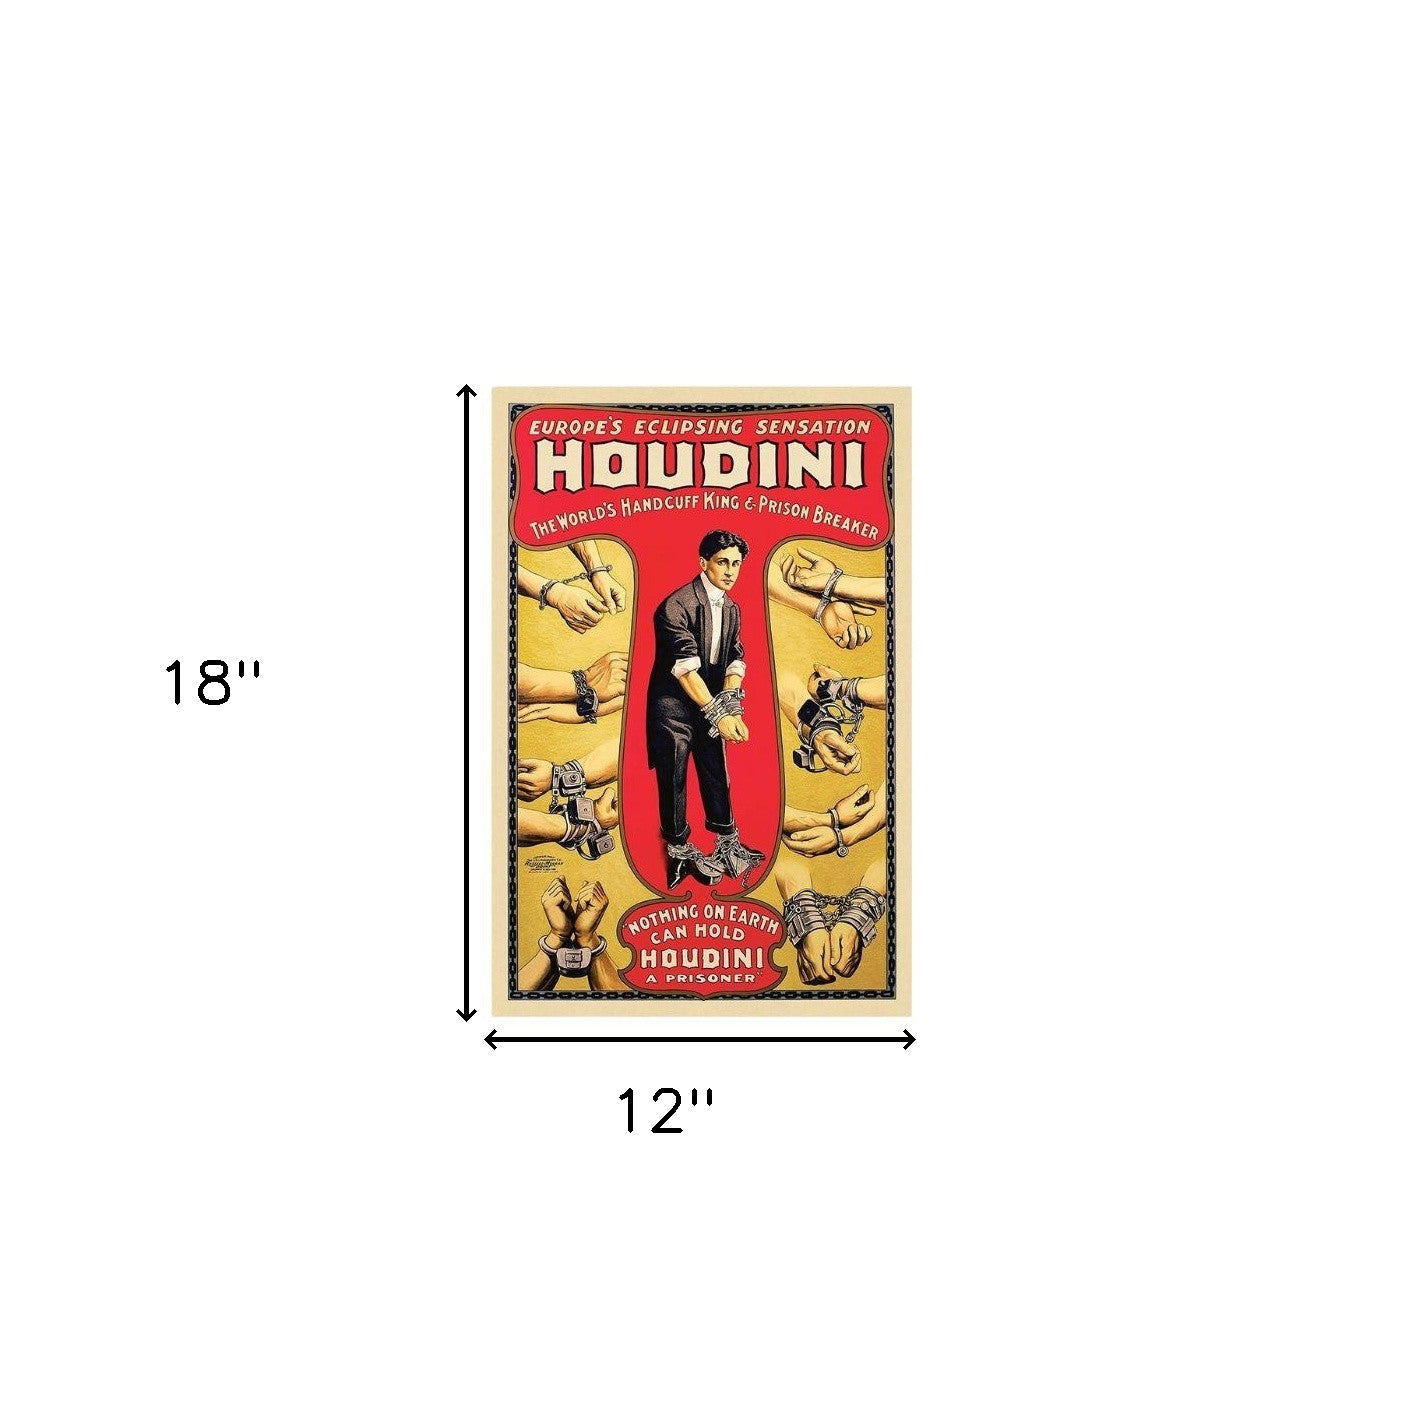 24" X 36" Houdini Handcuff King Vintage Magic Poster Wall Art